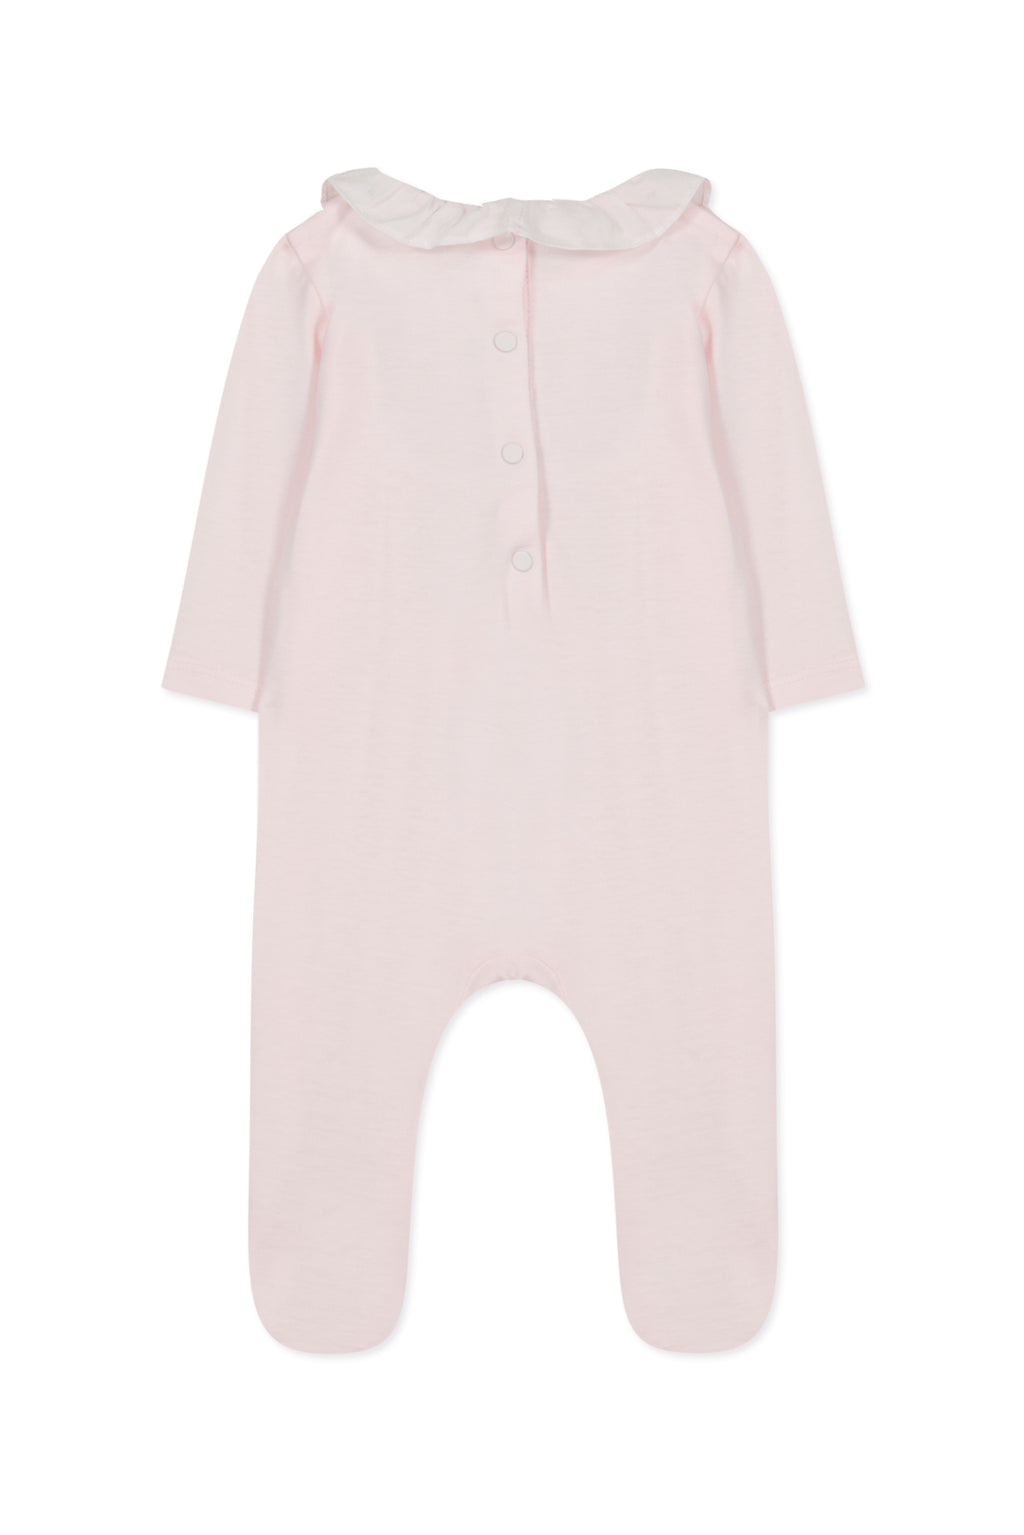 Pyjama - Rose pâle col plastron broderies